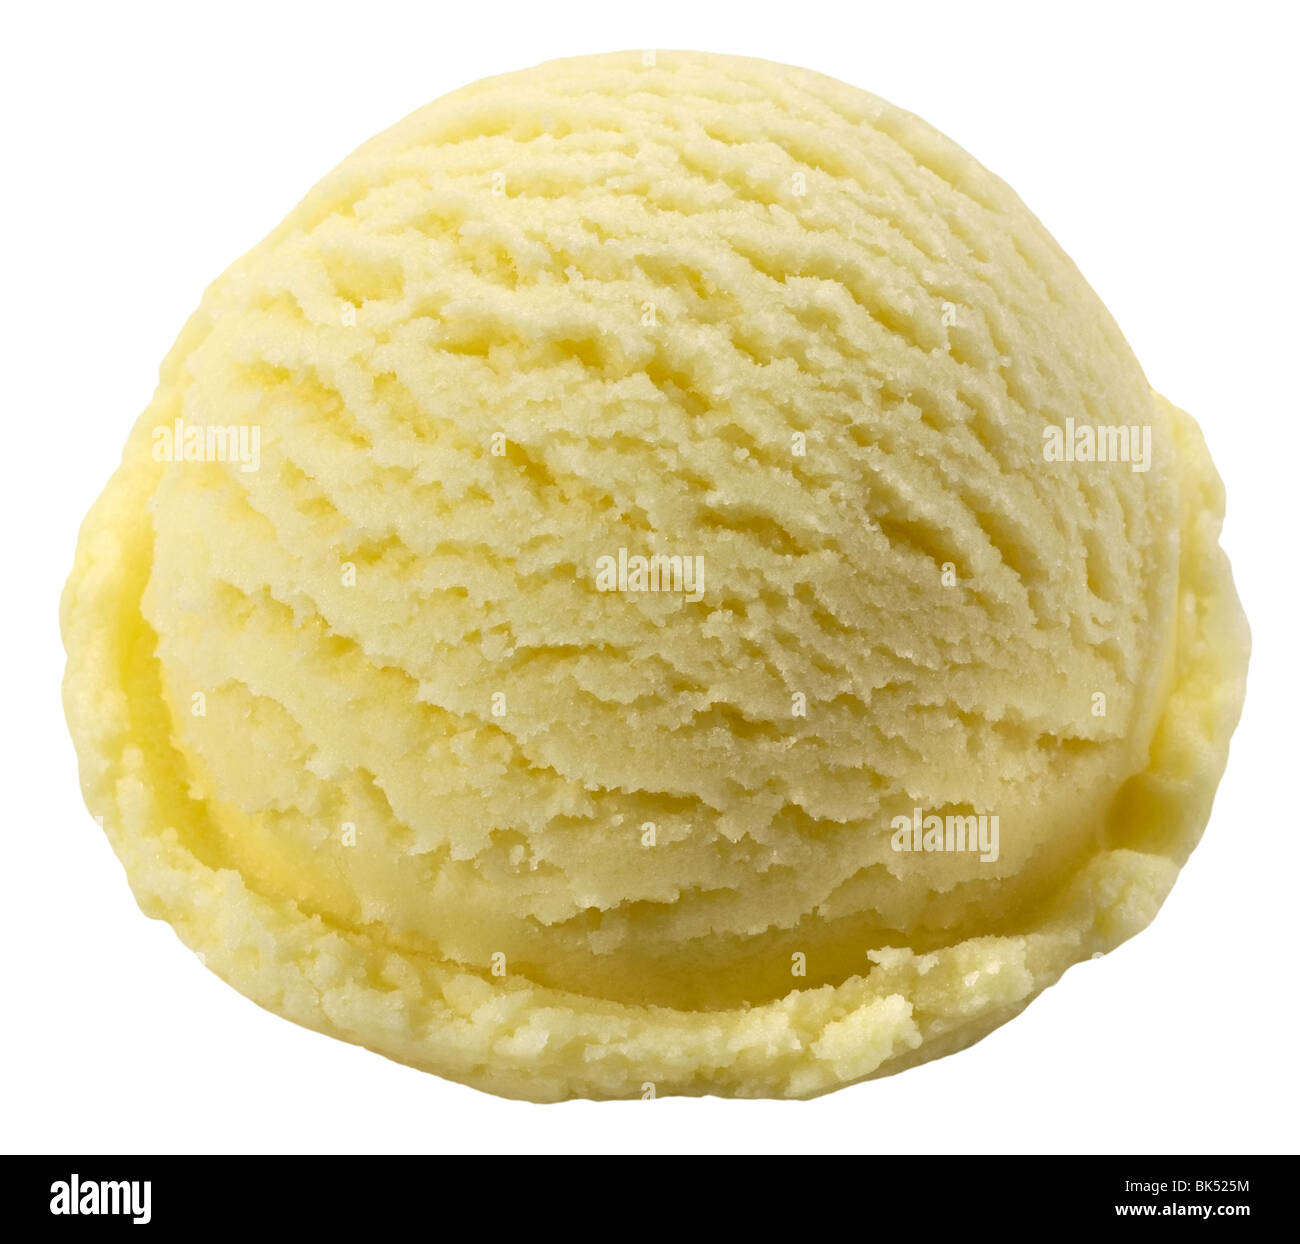 https://c8.alamy.com/comp/BK525M/vanilla-ice-cream-ballclipping-path-BK525M.jpg